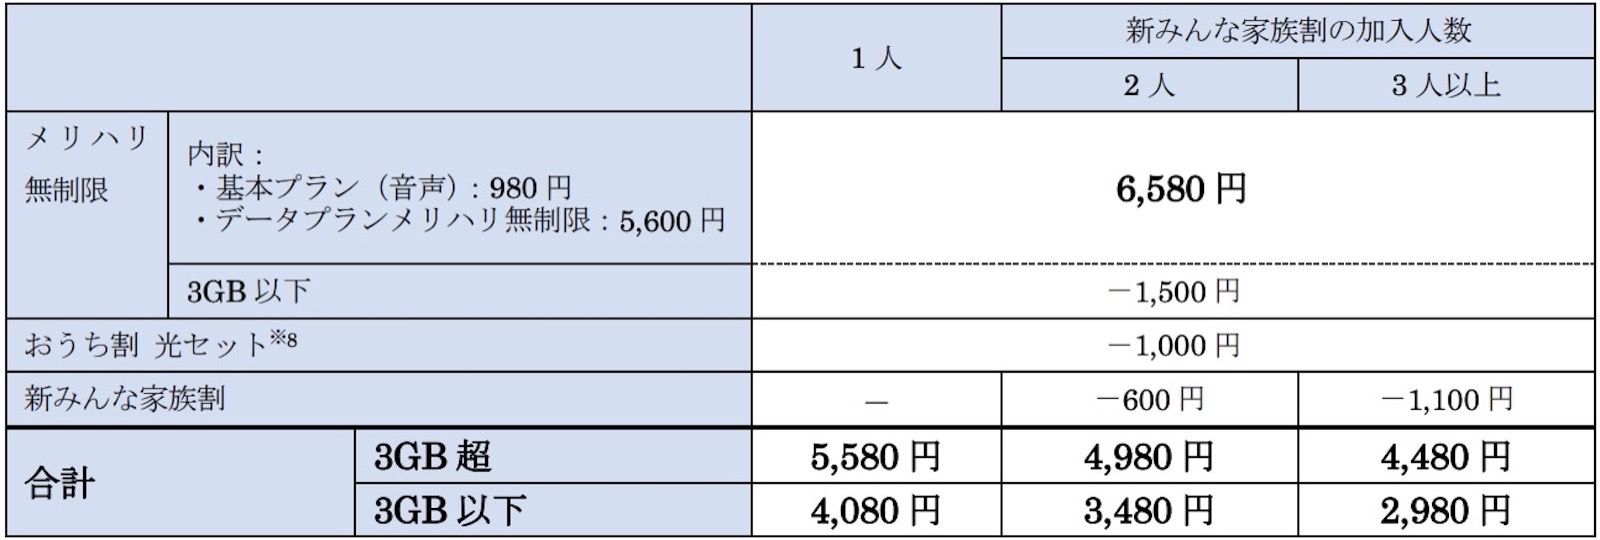 Softbank pricing for merihari museigen